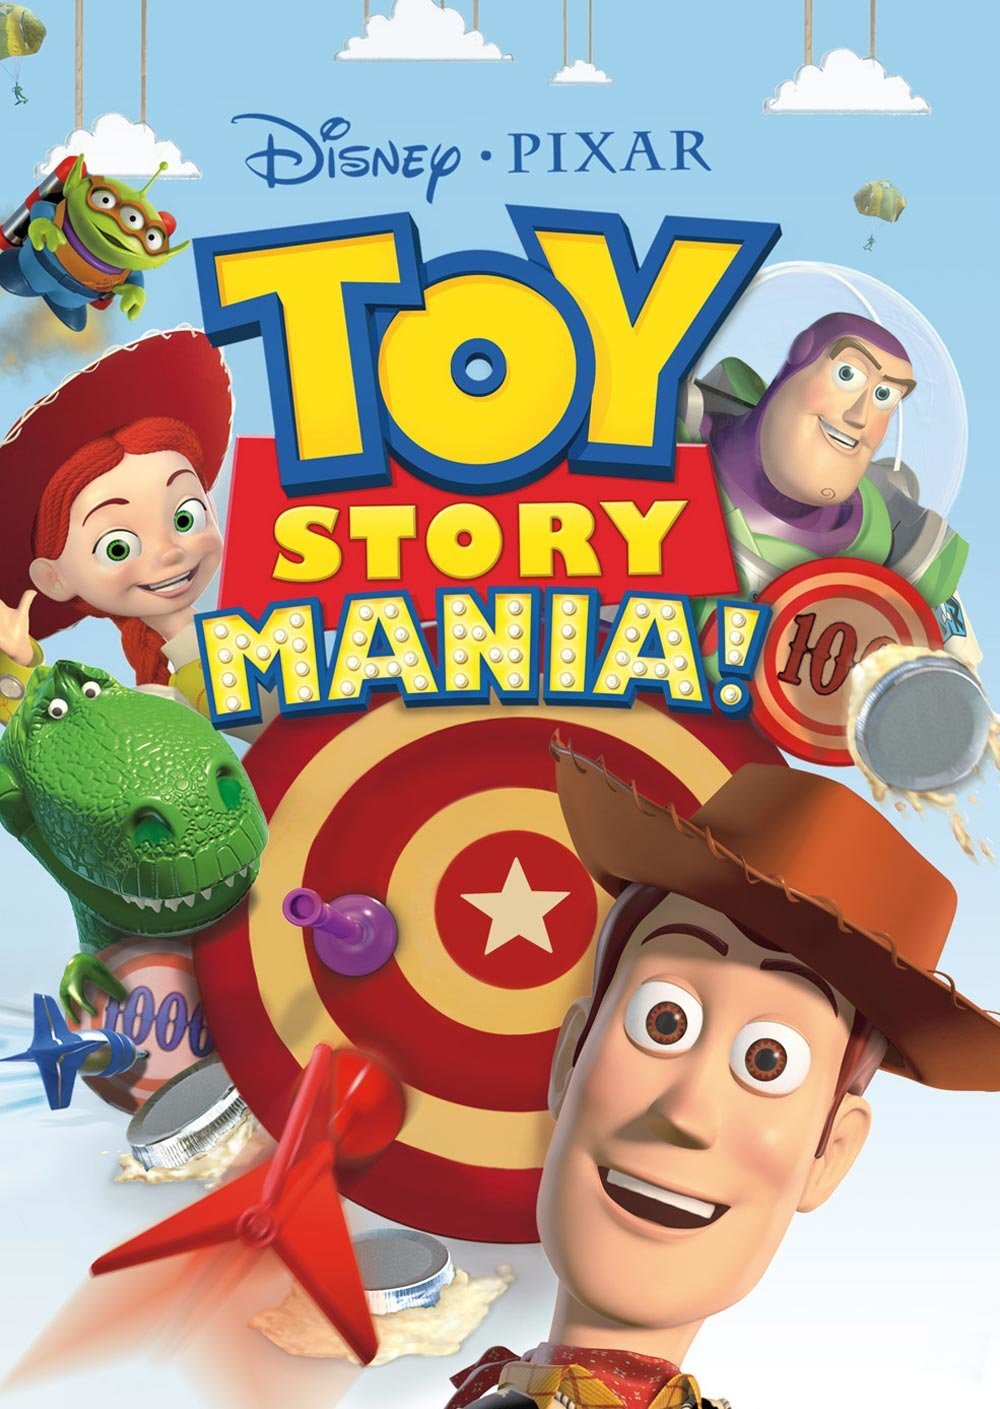 Disney Pixar Toy Story Mania! - PC DIGITAL